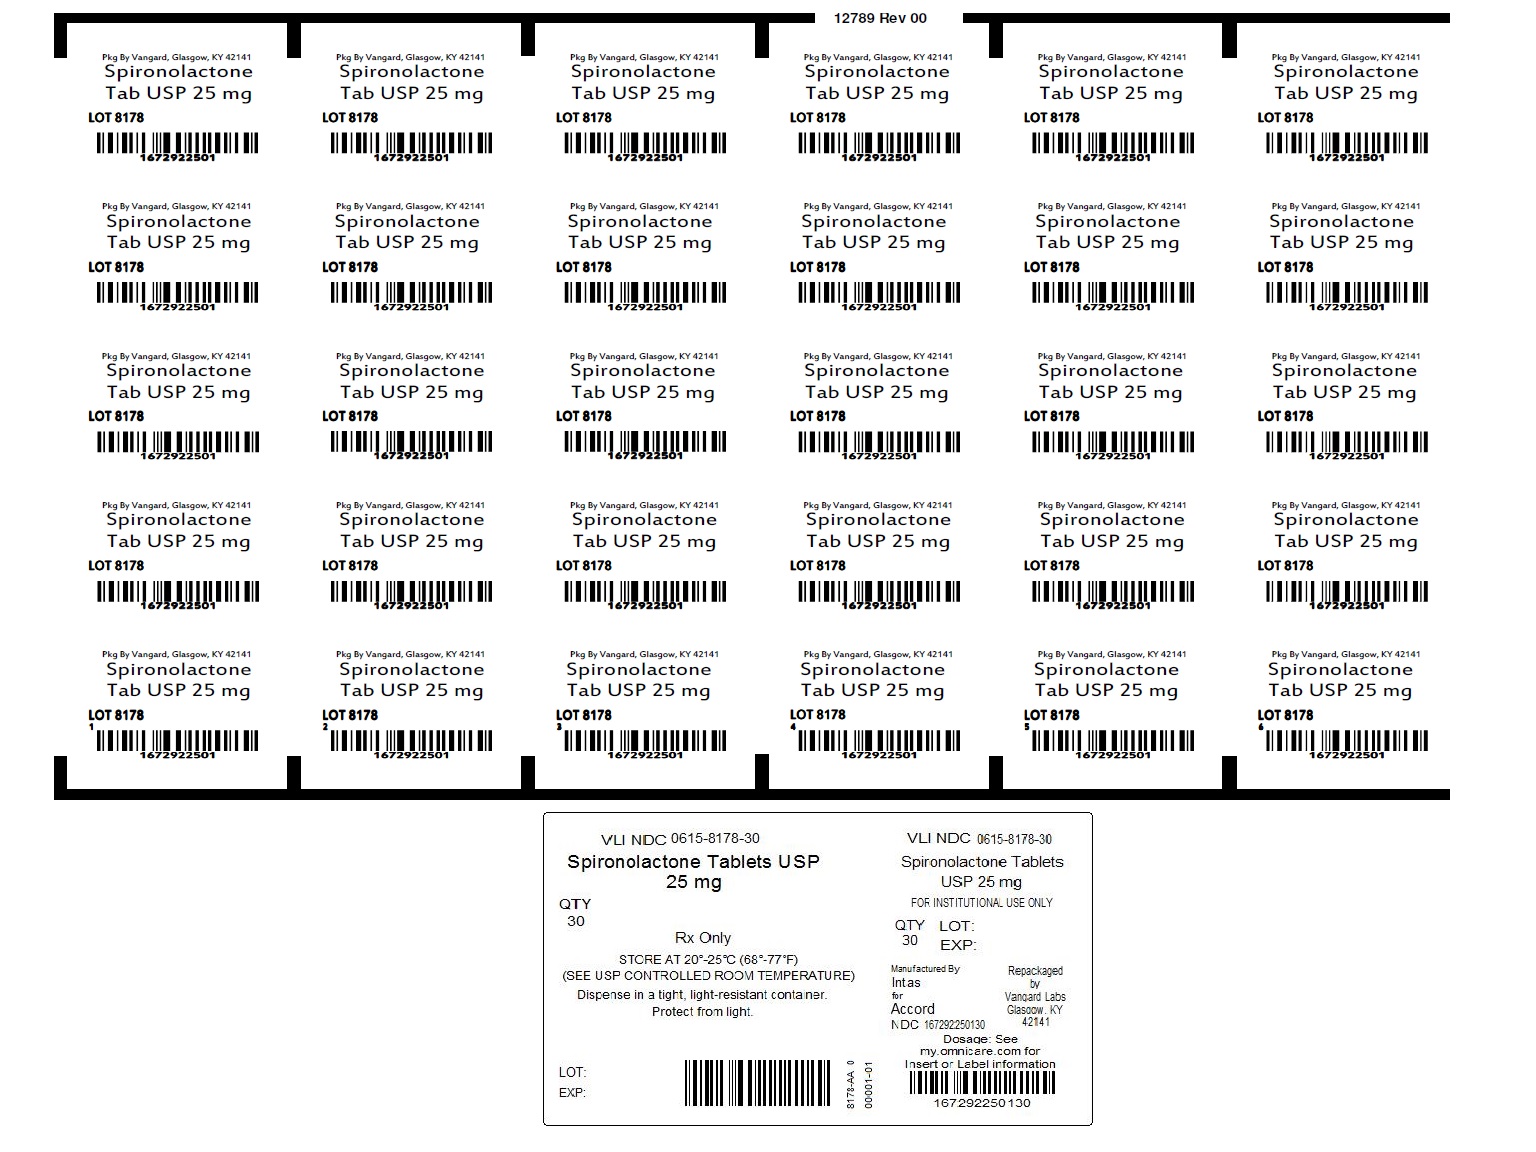 Spironolactone 25mg Tabs unit dose label